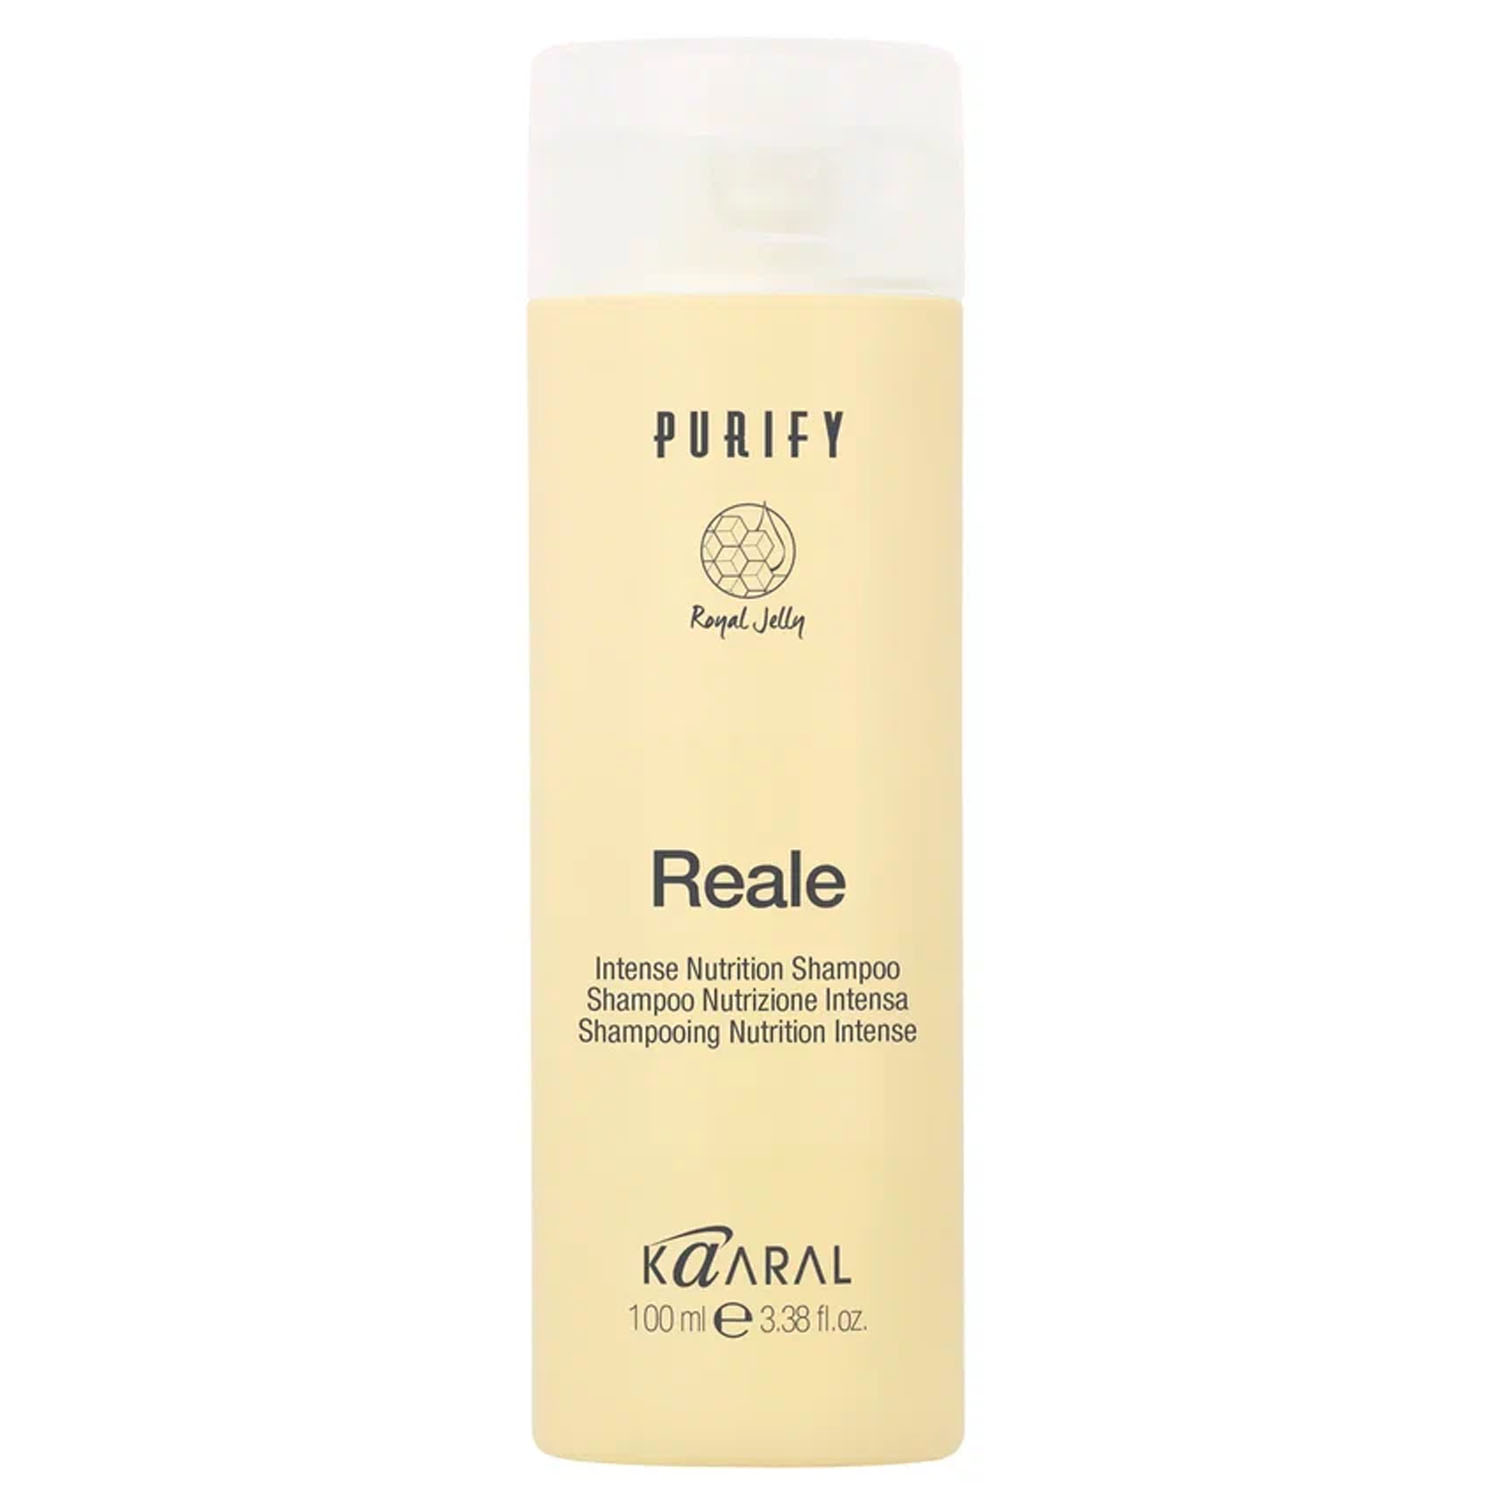 шампунь для поврежденных волос восстанавливающий purify reale shampoo 100 мл Kaaral Восстанавливающий шампунь для поврежденных волос Reale Intense Nutrition Shampoo, 100 мл (Kaaral, Purify)